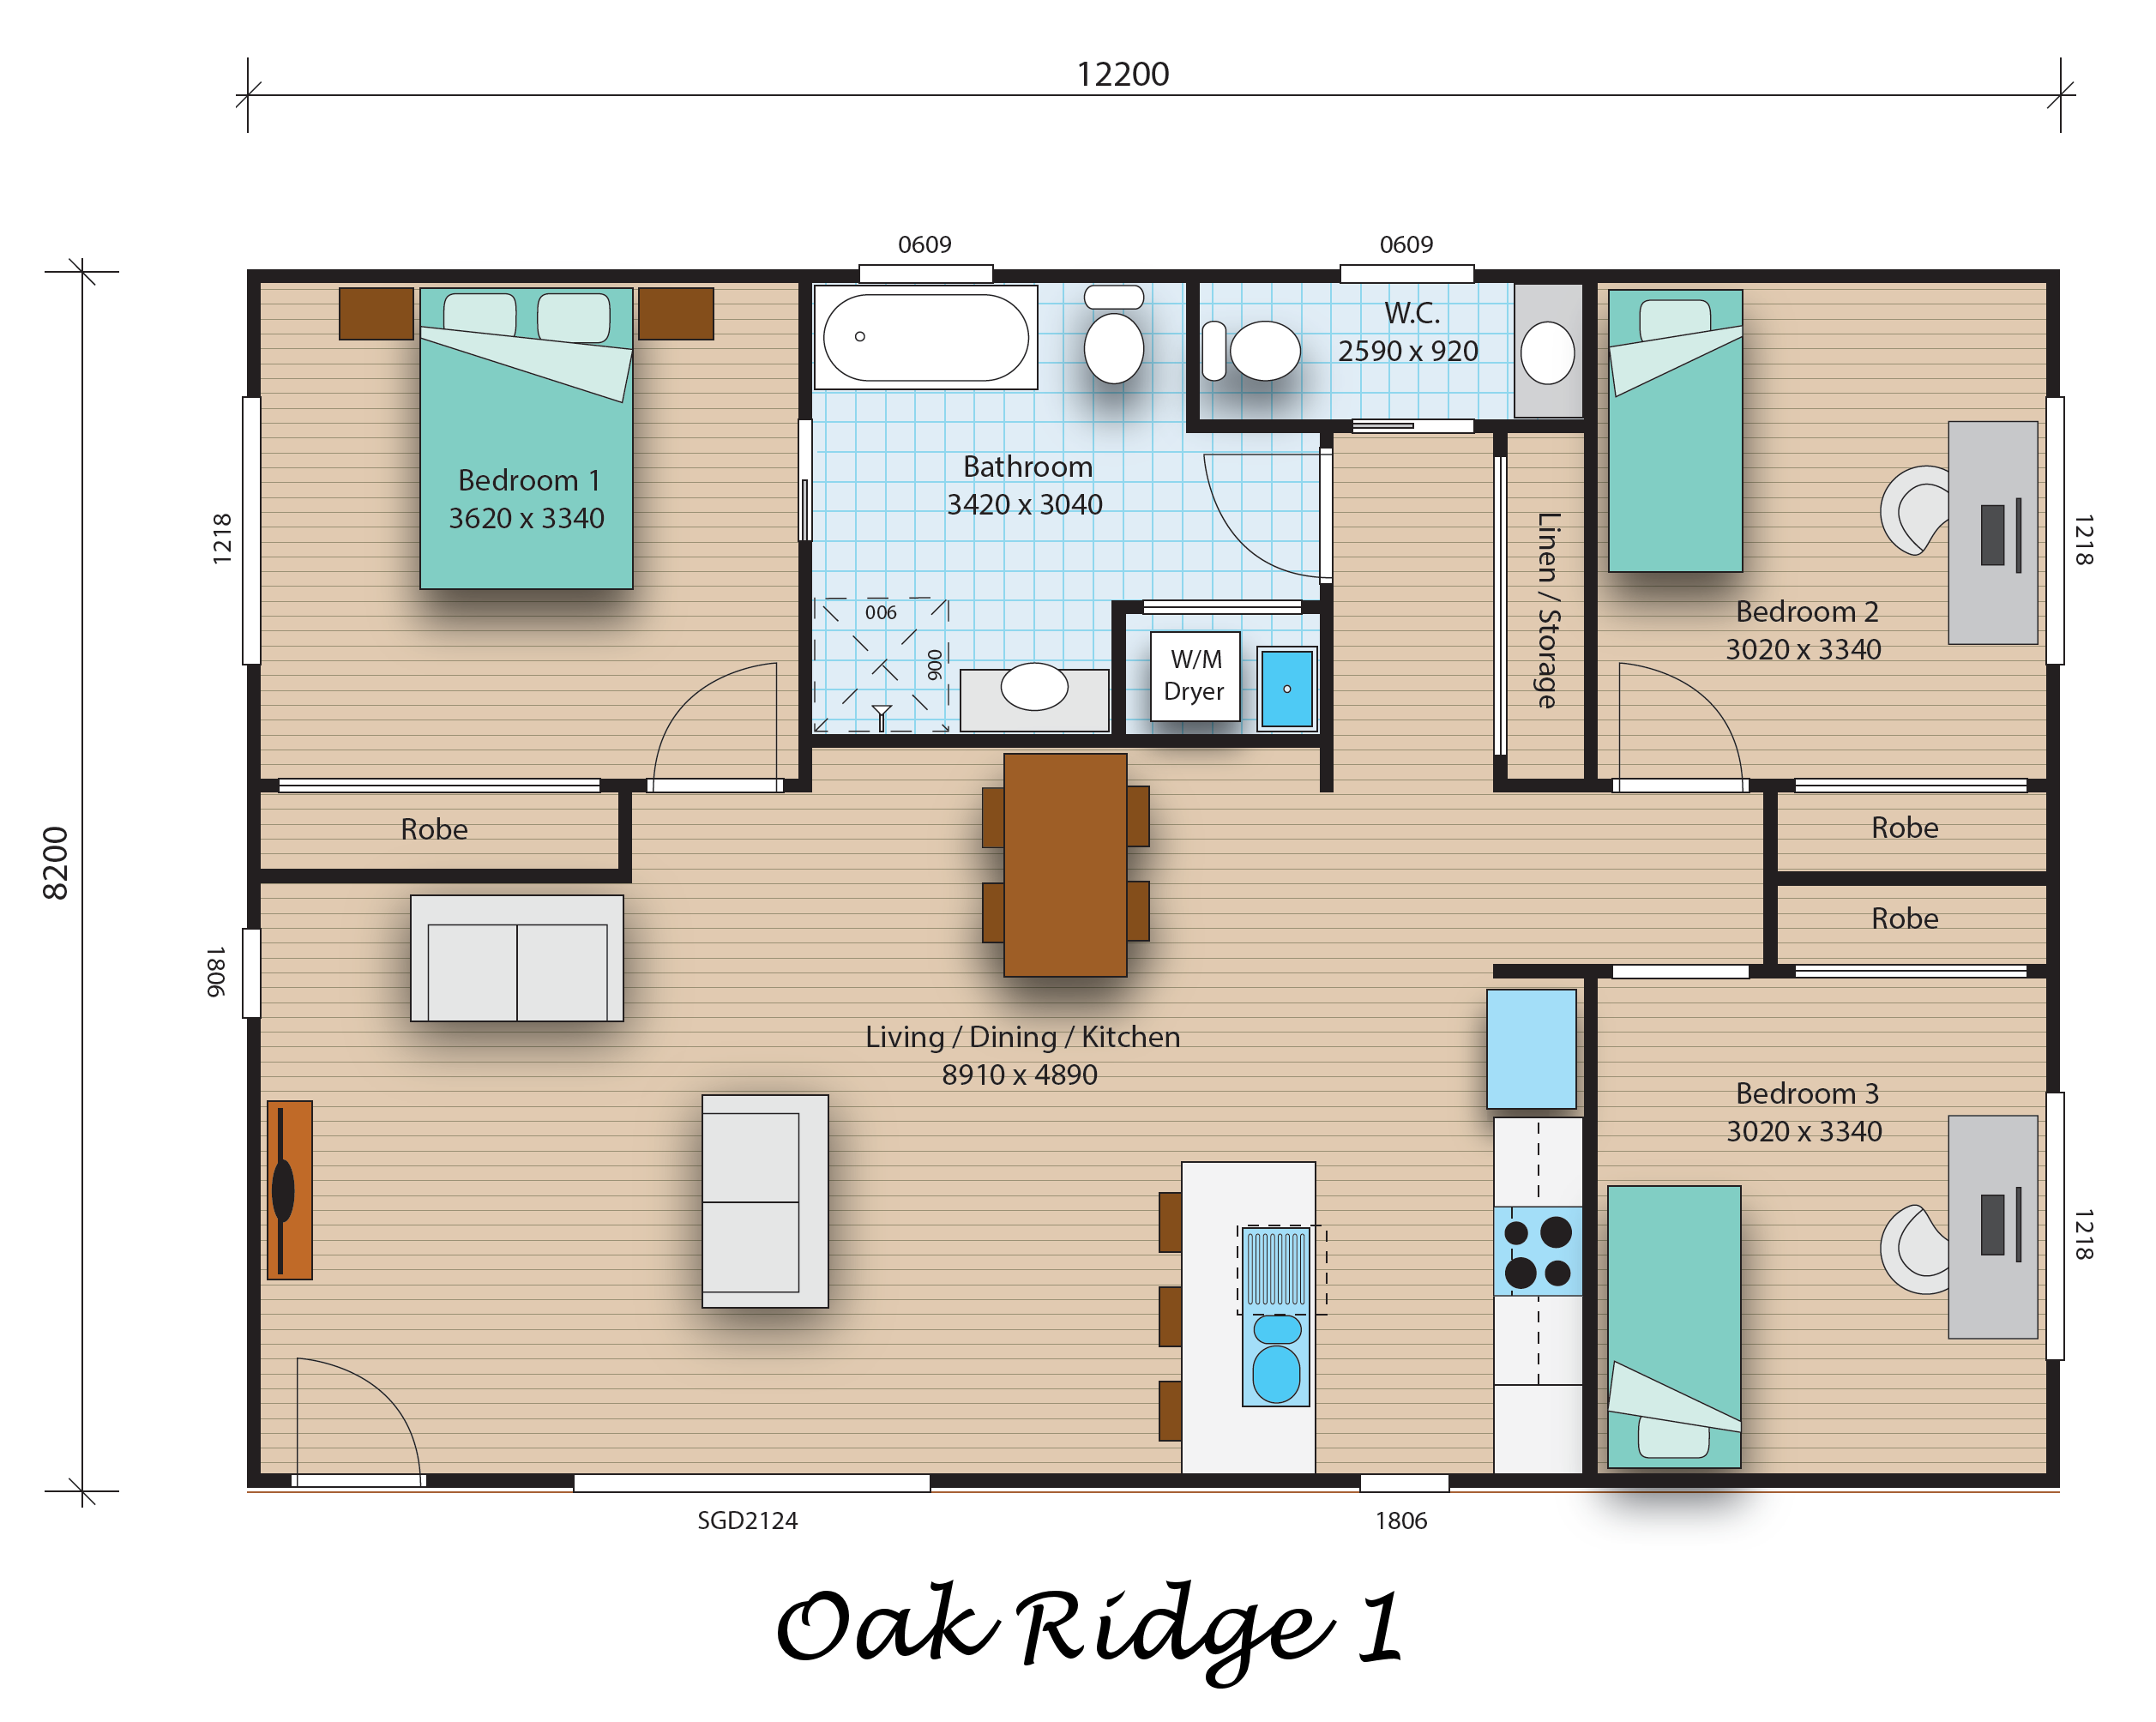 Oak Ridge 1 floorplan image